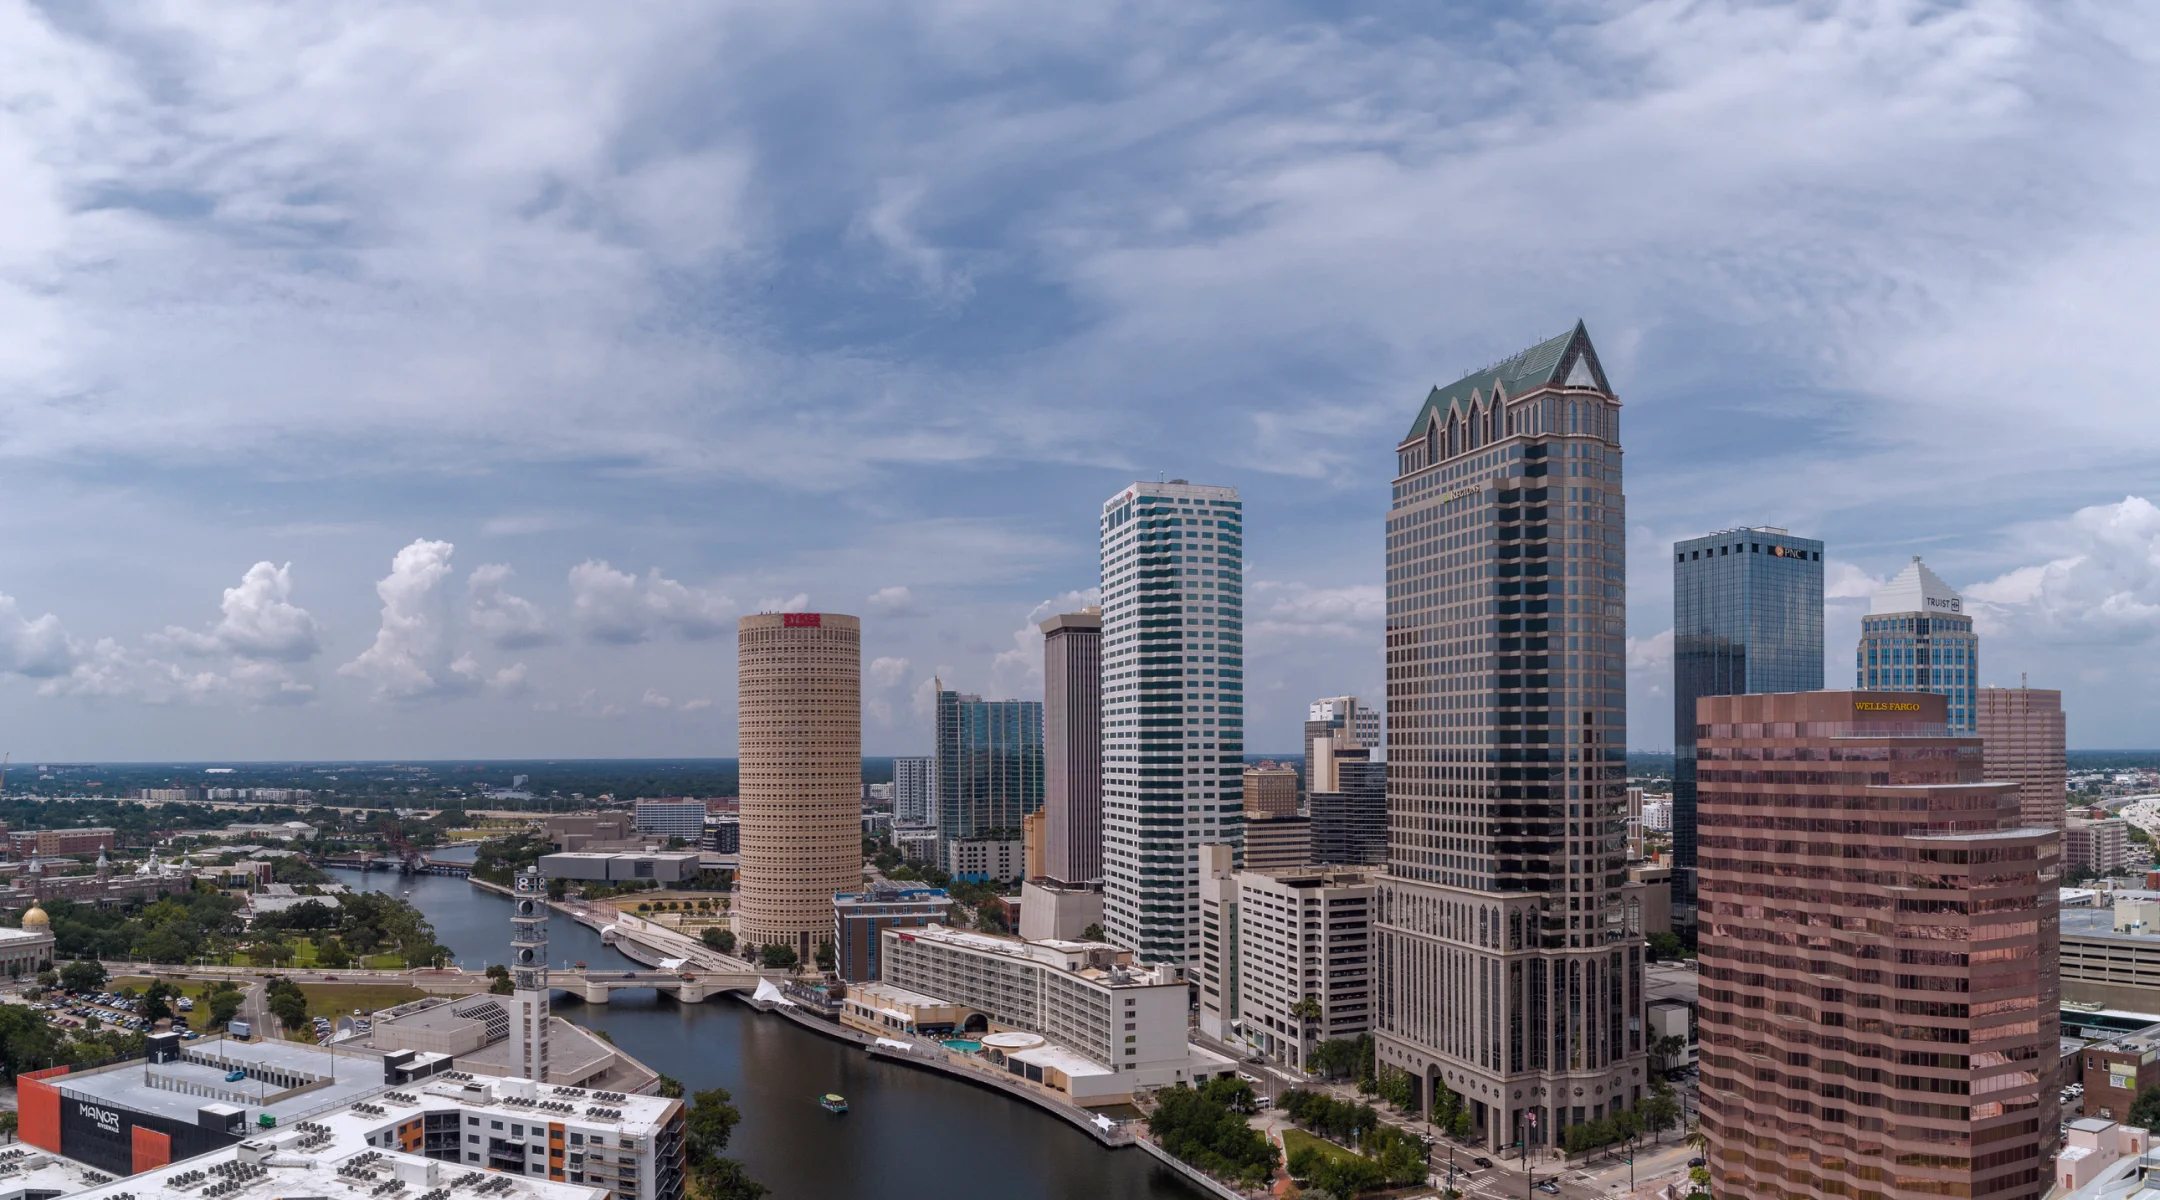 Tampa, Florida